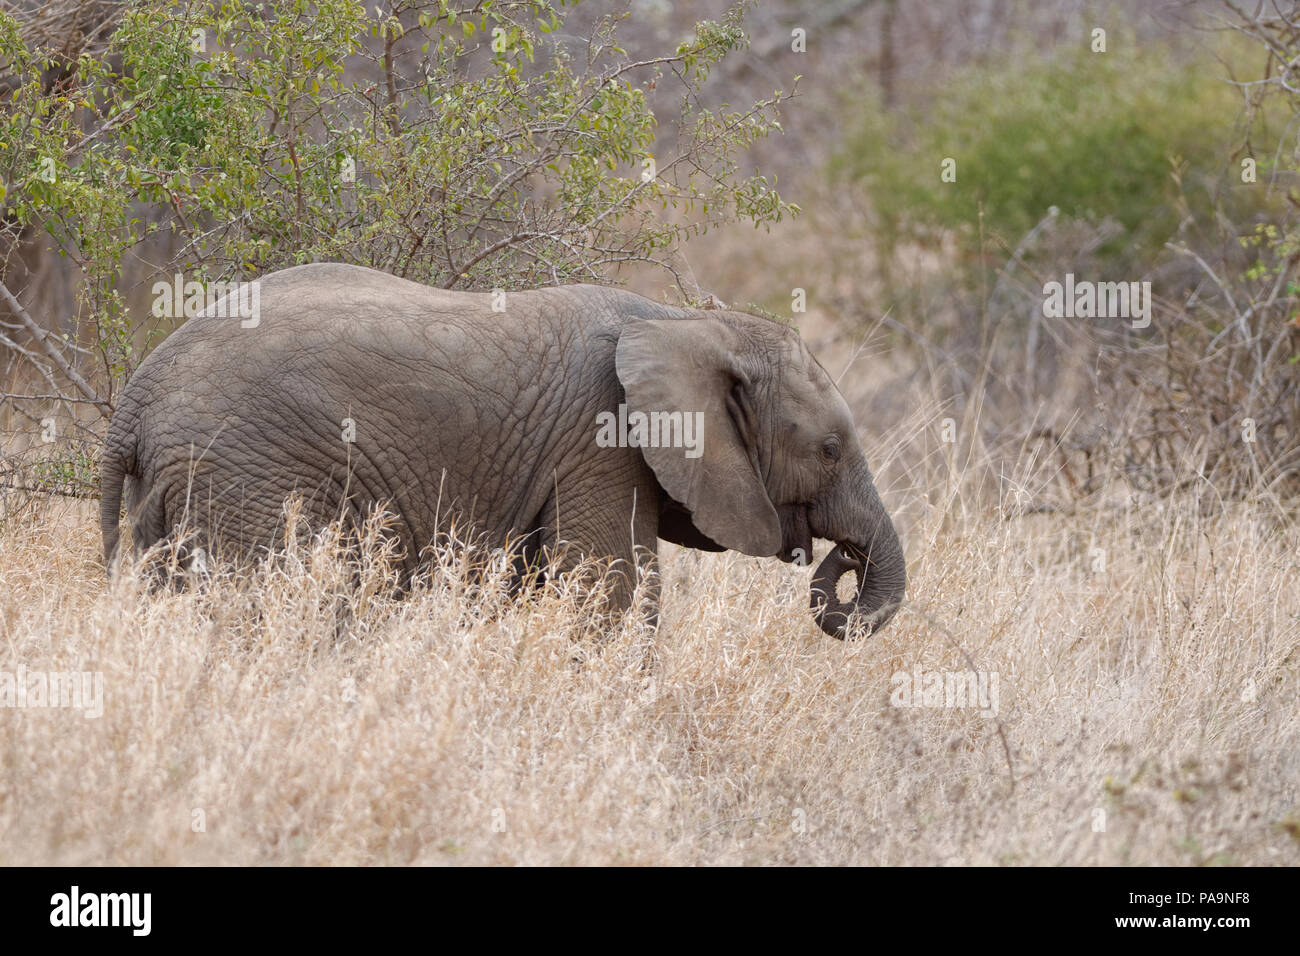 Afrikanischen Busch Elefant (Loxodonta africana), Tier Babys auf trockenem Gras, Krüger Nationalpark, Südafrika, Afrika Stockfoto